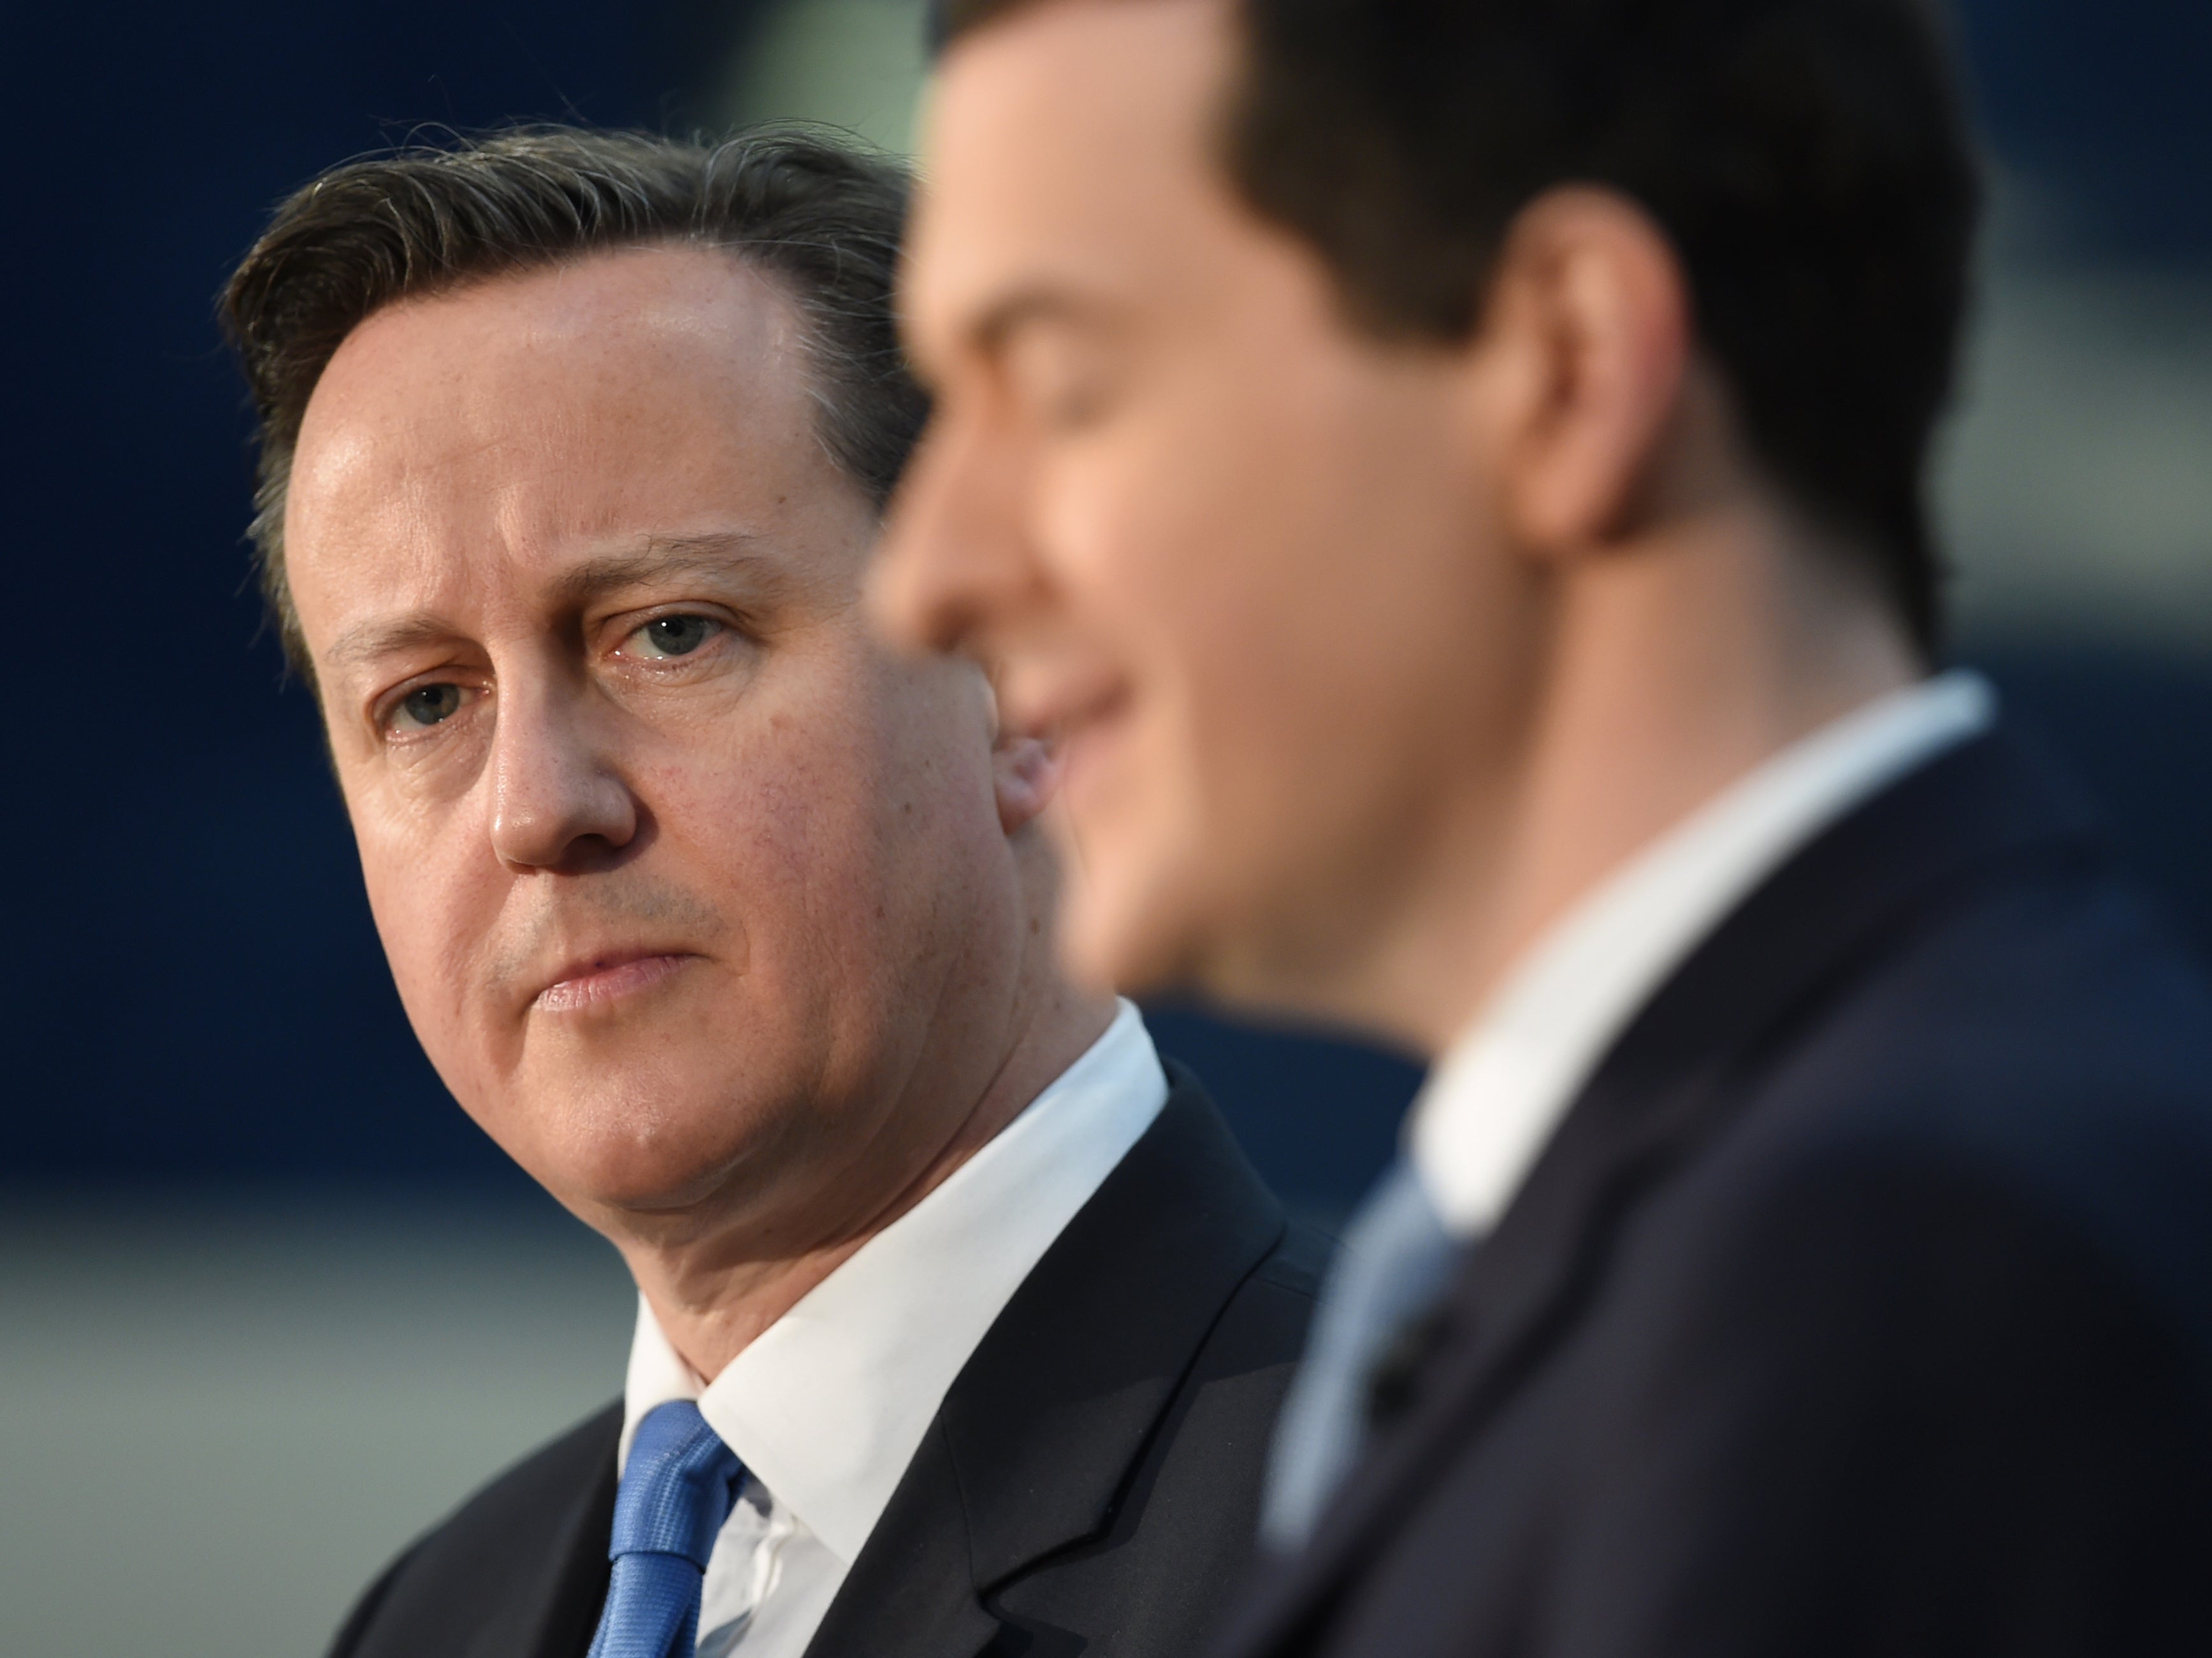 Osborne’s slick polished demeanour, hard on the heels of David Cameron, epitomised a world of distant, unaccountable privilege